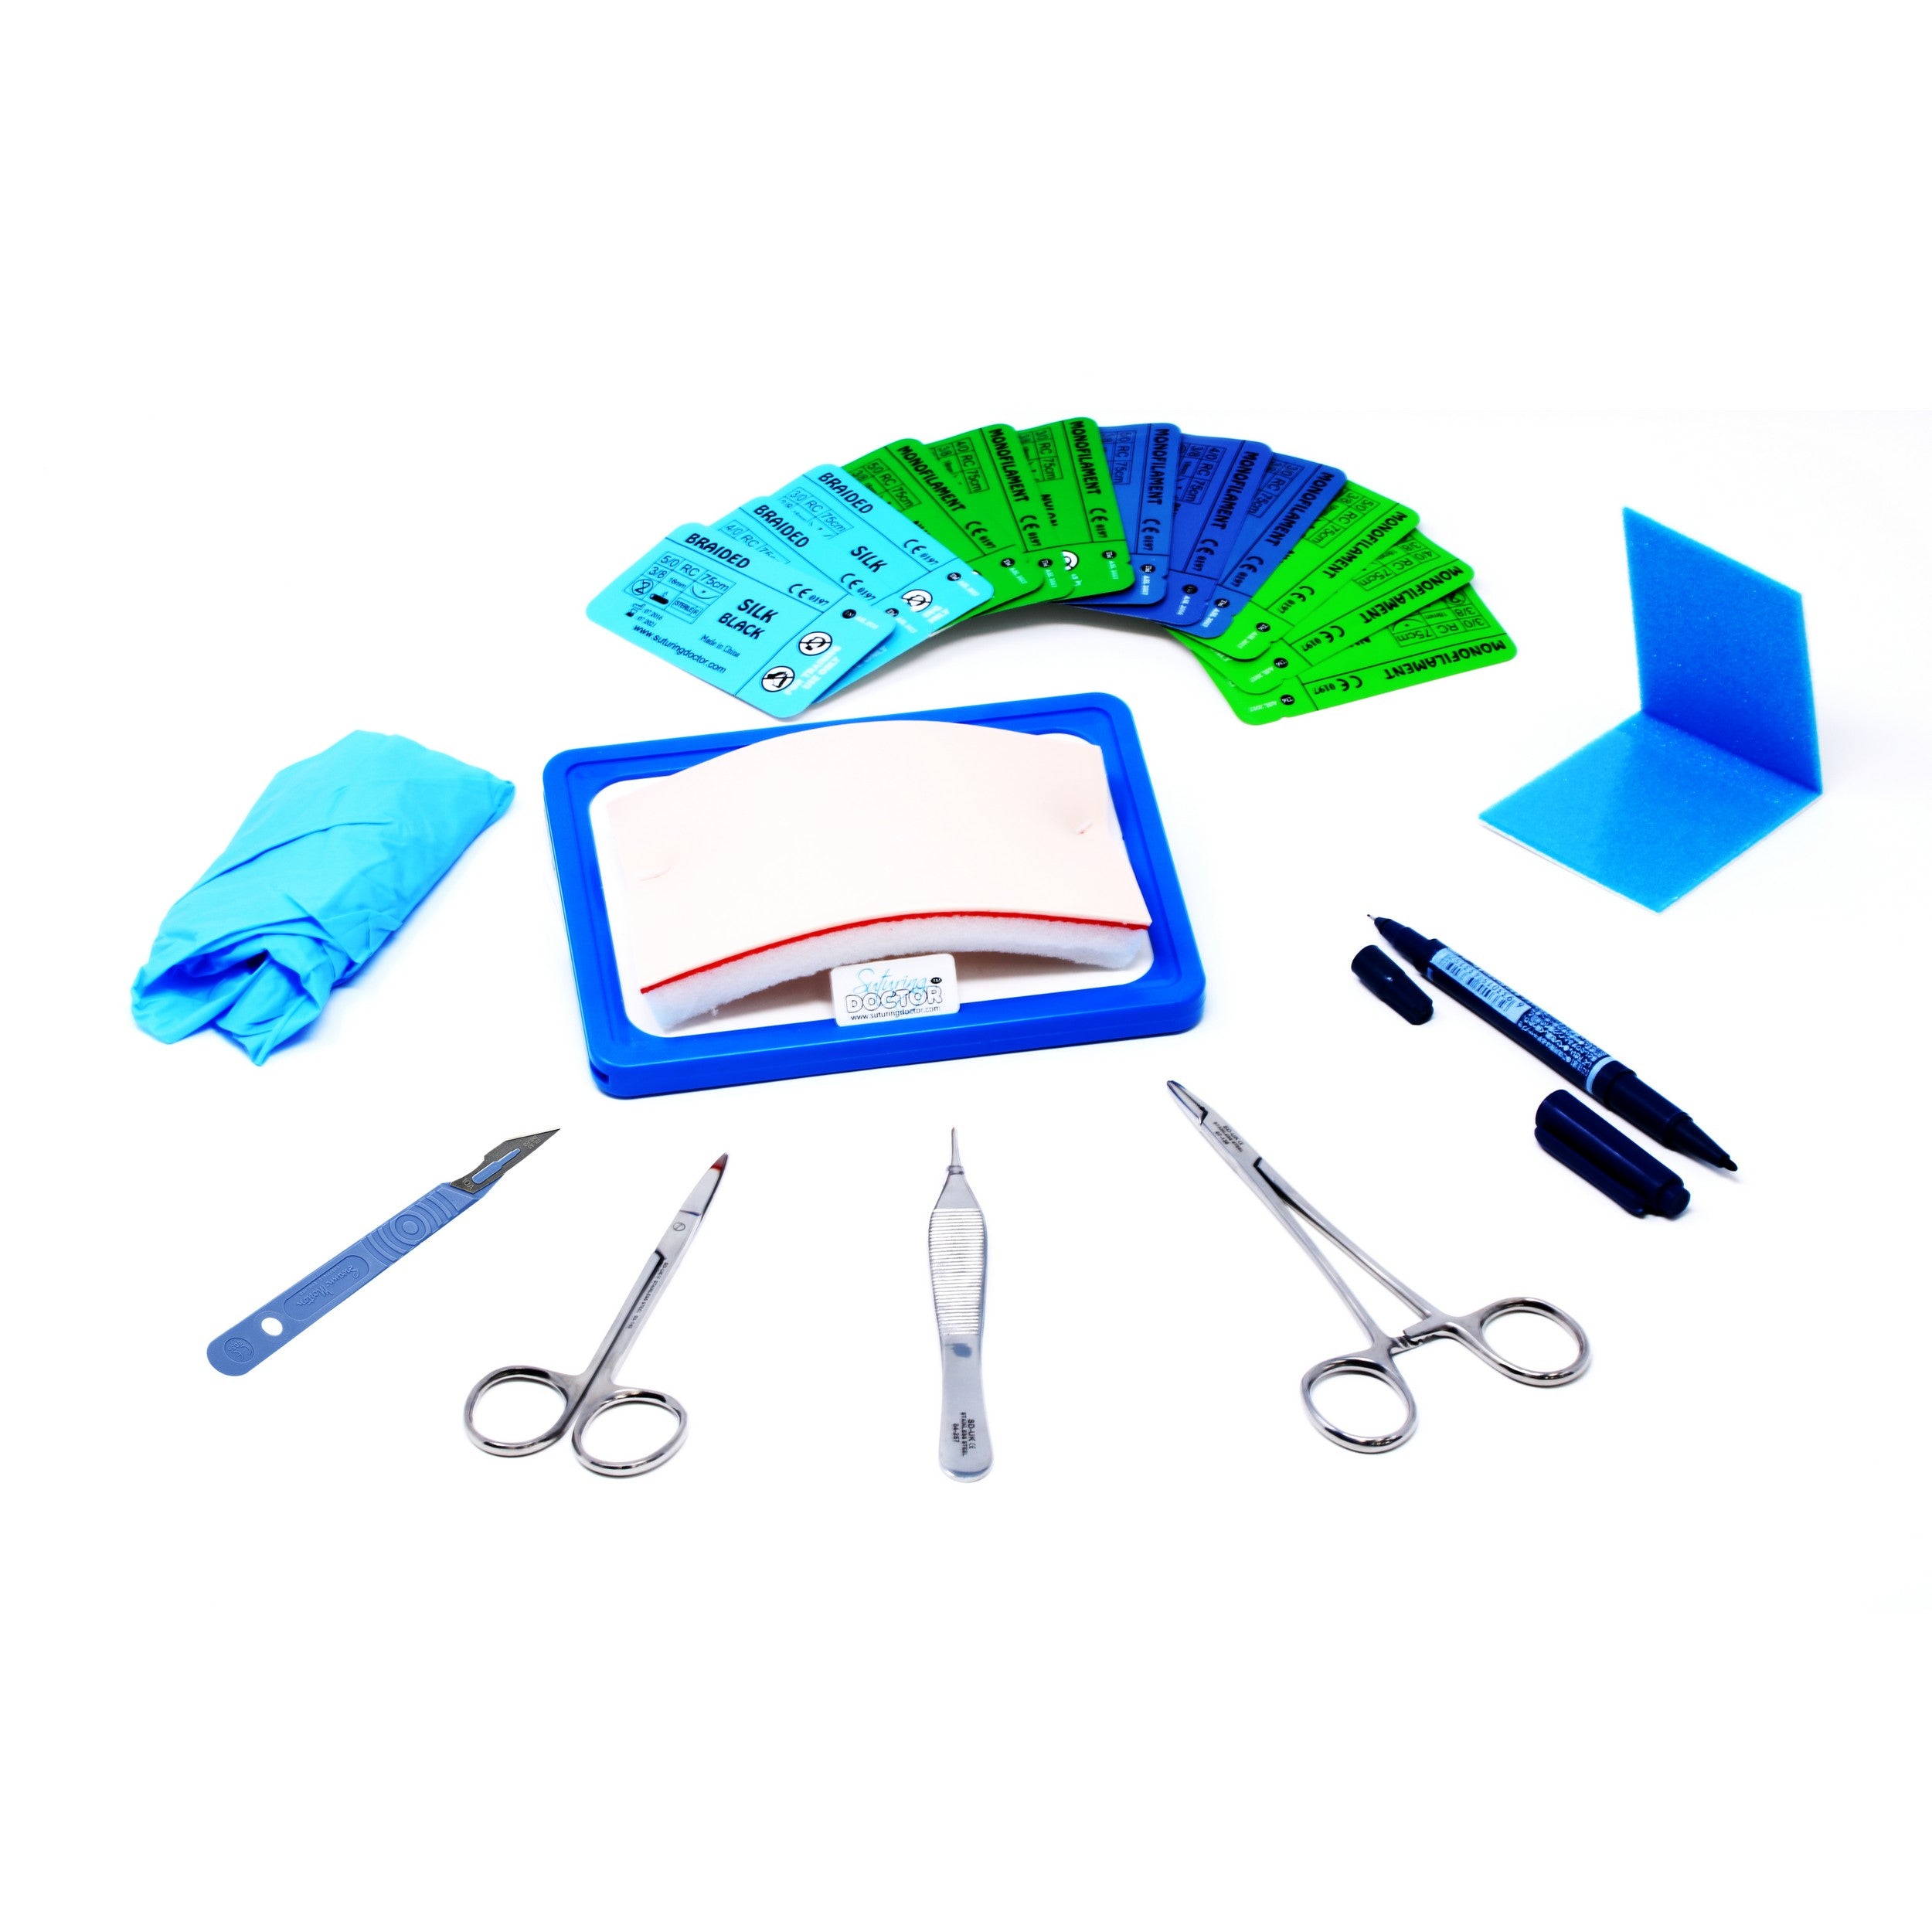 Professional Suturing Instrument Kit